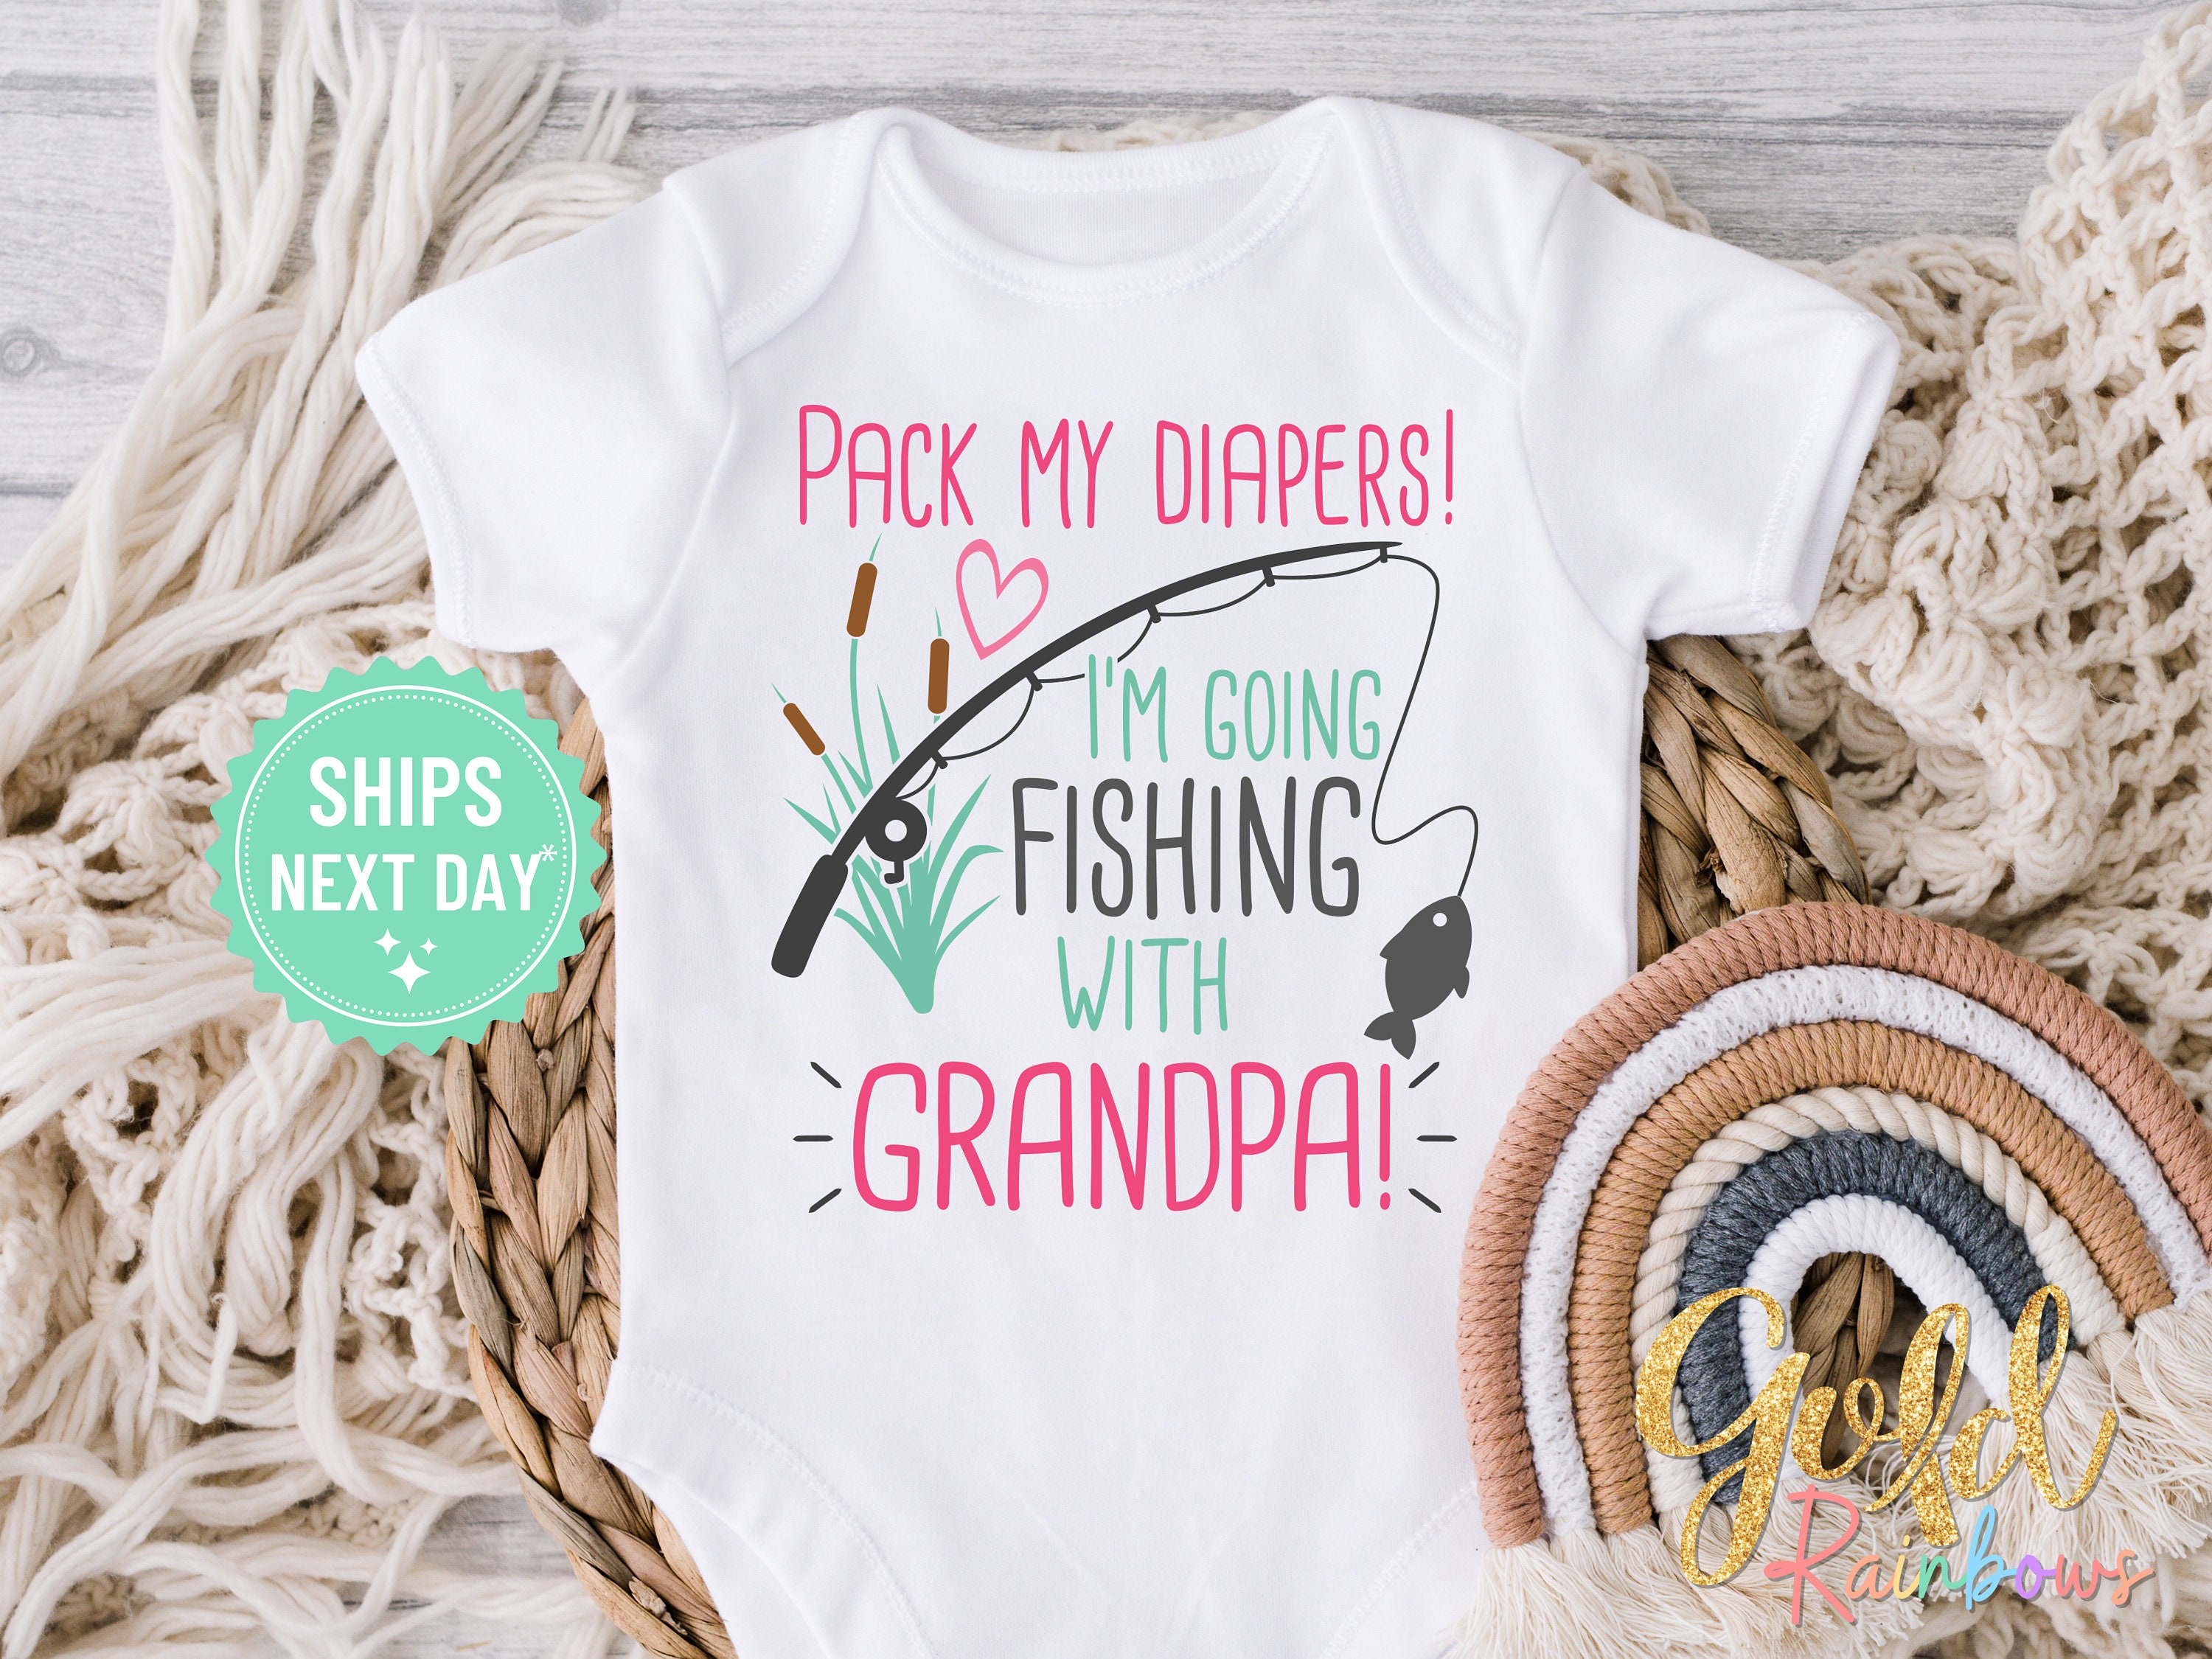 Going Fishing With Grandpa Girls Onesie®, Grandpas Fishing Girl Shirt,  Granddaughter Fishing Tee, Granddaughter Baby Shower Gift, 1033 